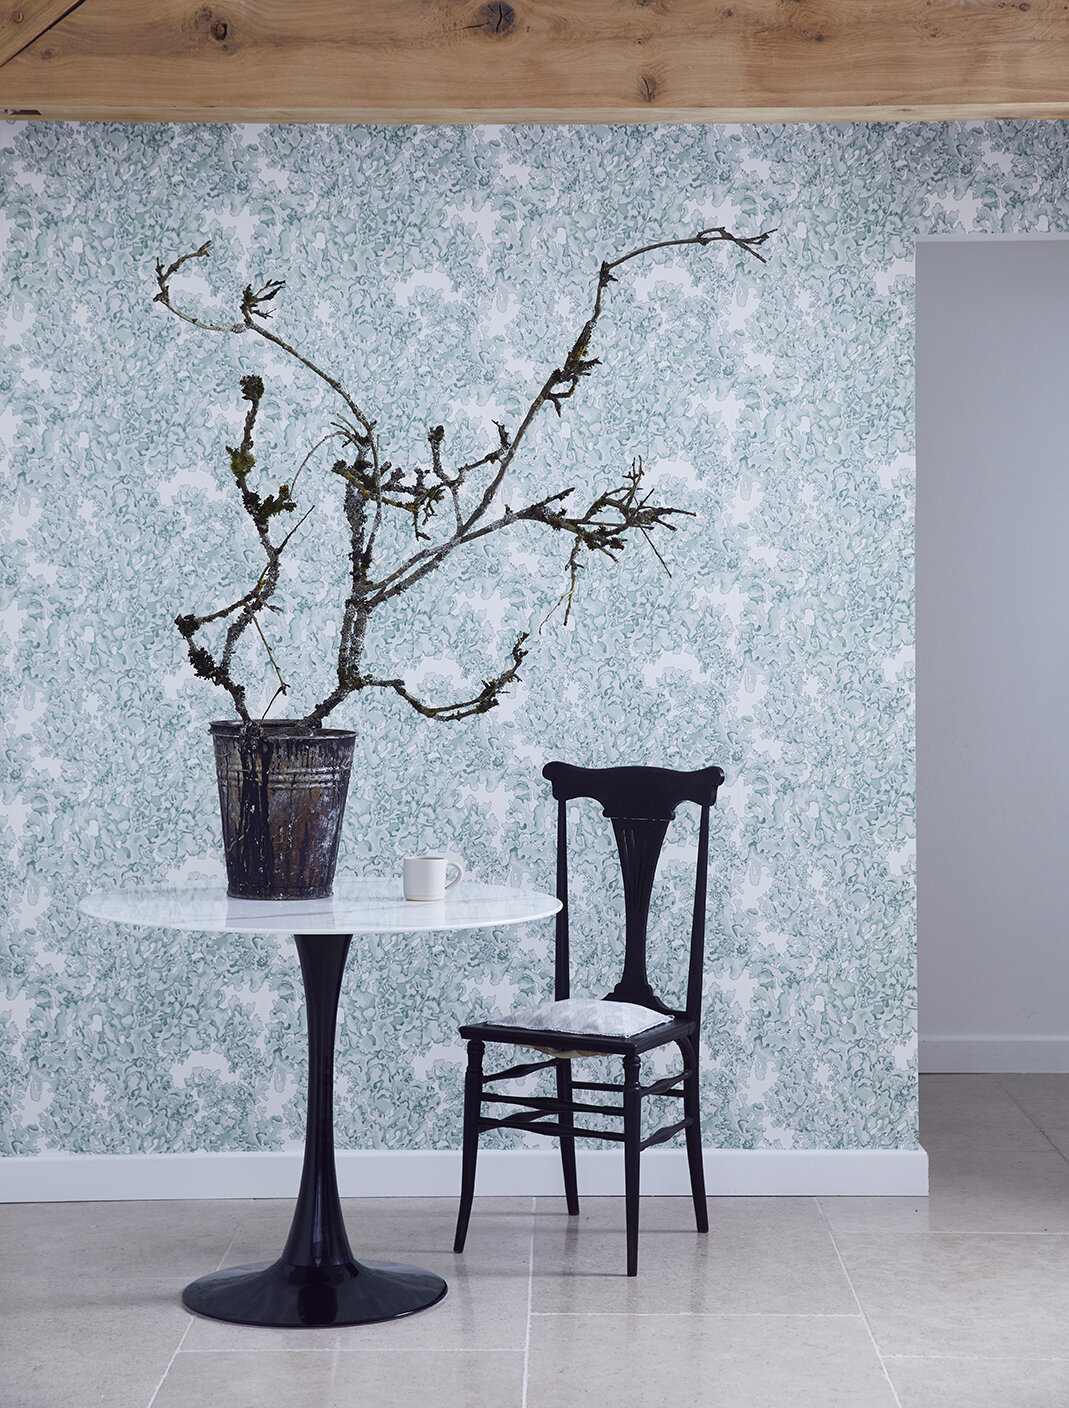 Lichen seaweed wallpaper abigail edwards â abigail edwards hand drawn wallpapers fabrics and accessories